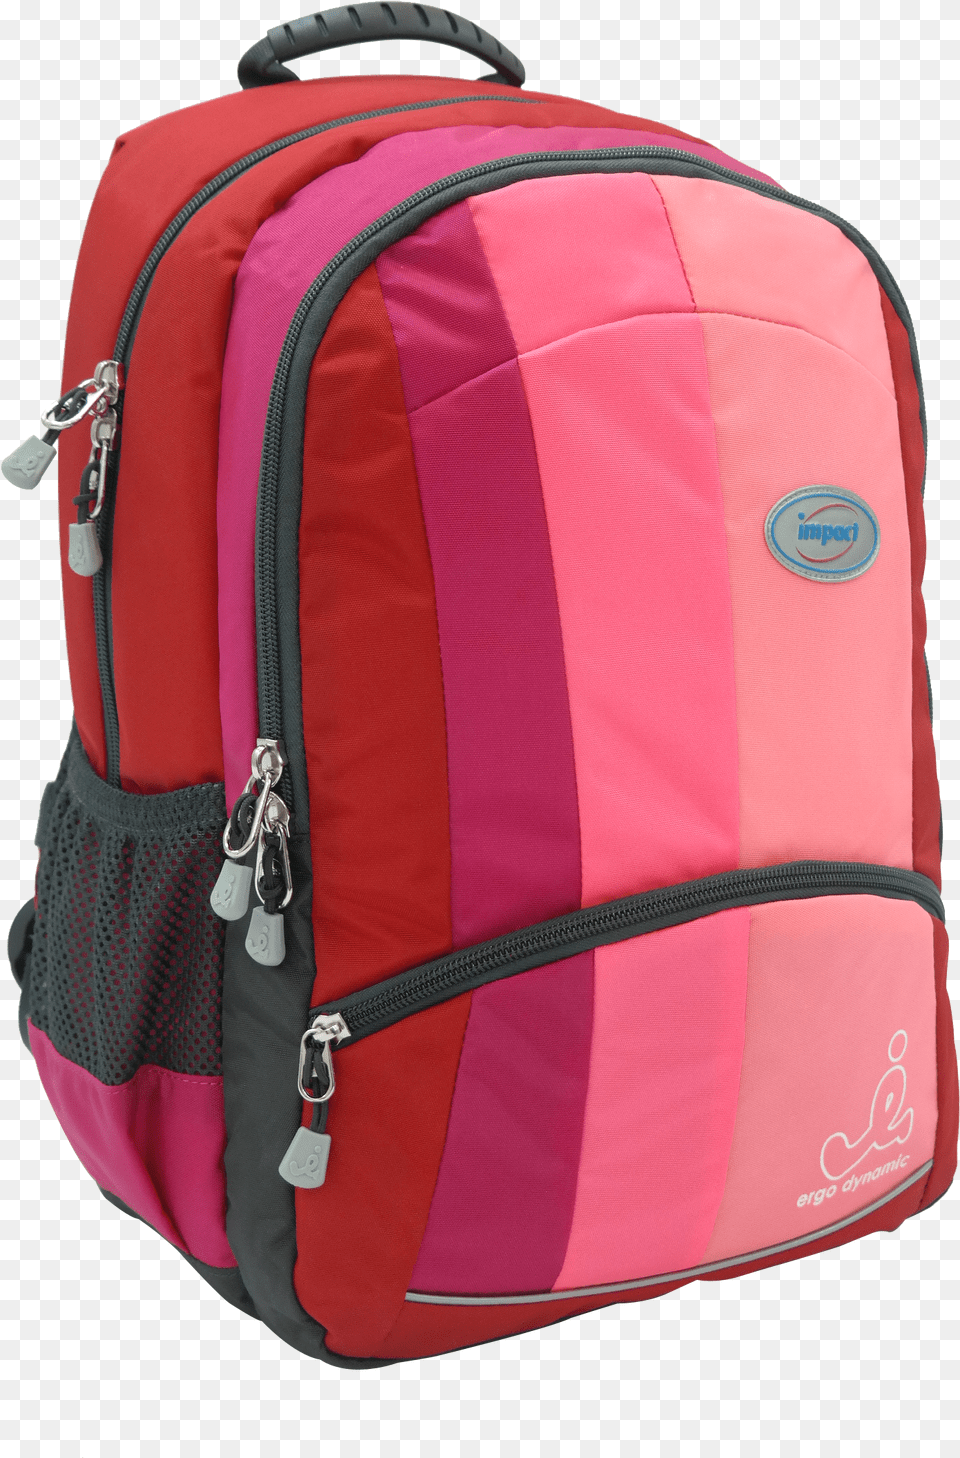 Impact Ergonomic Backpack Ipeg 130 Pink School Bags Transparent, Bag Free Png